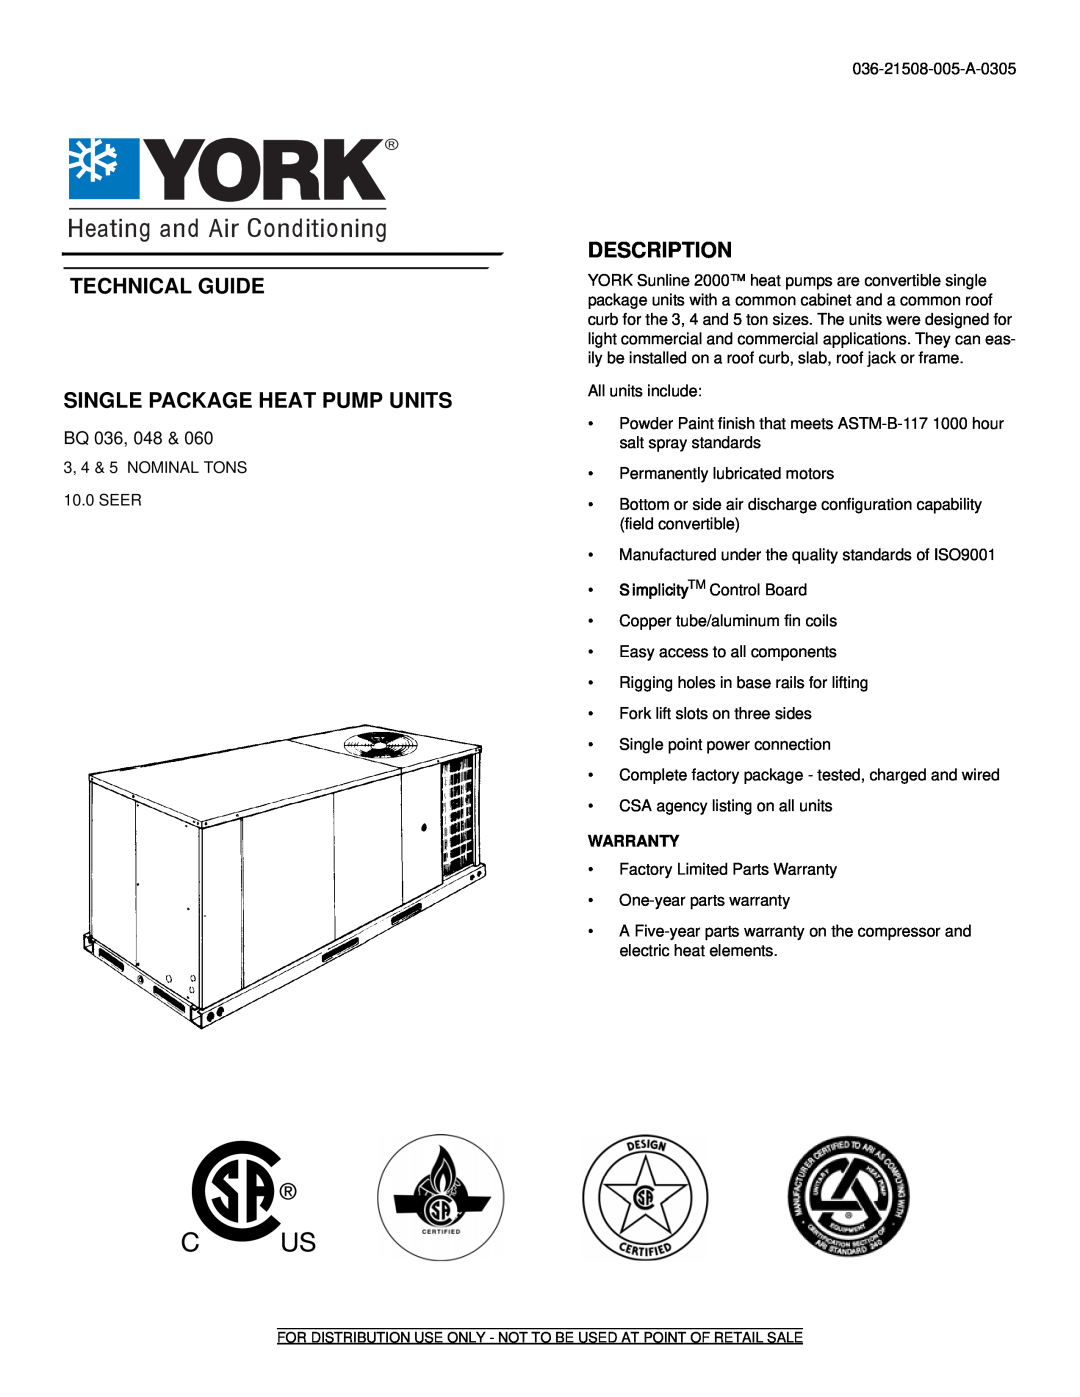 York BQ 036, BQ 060, BQ 048 warranty Technical Guide Single Package Heat Pump Units, Description, Bq 